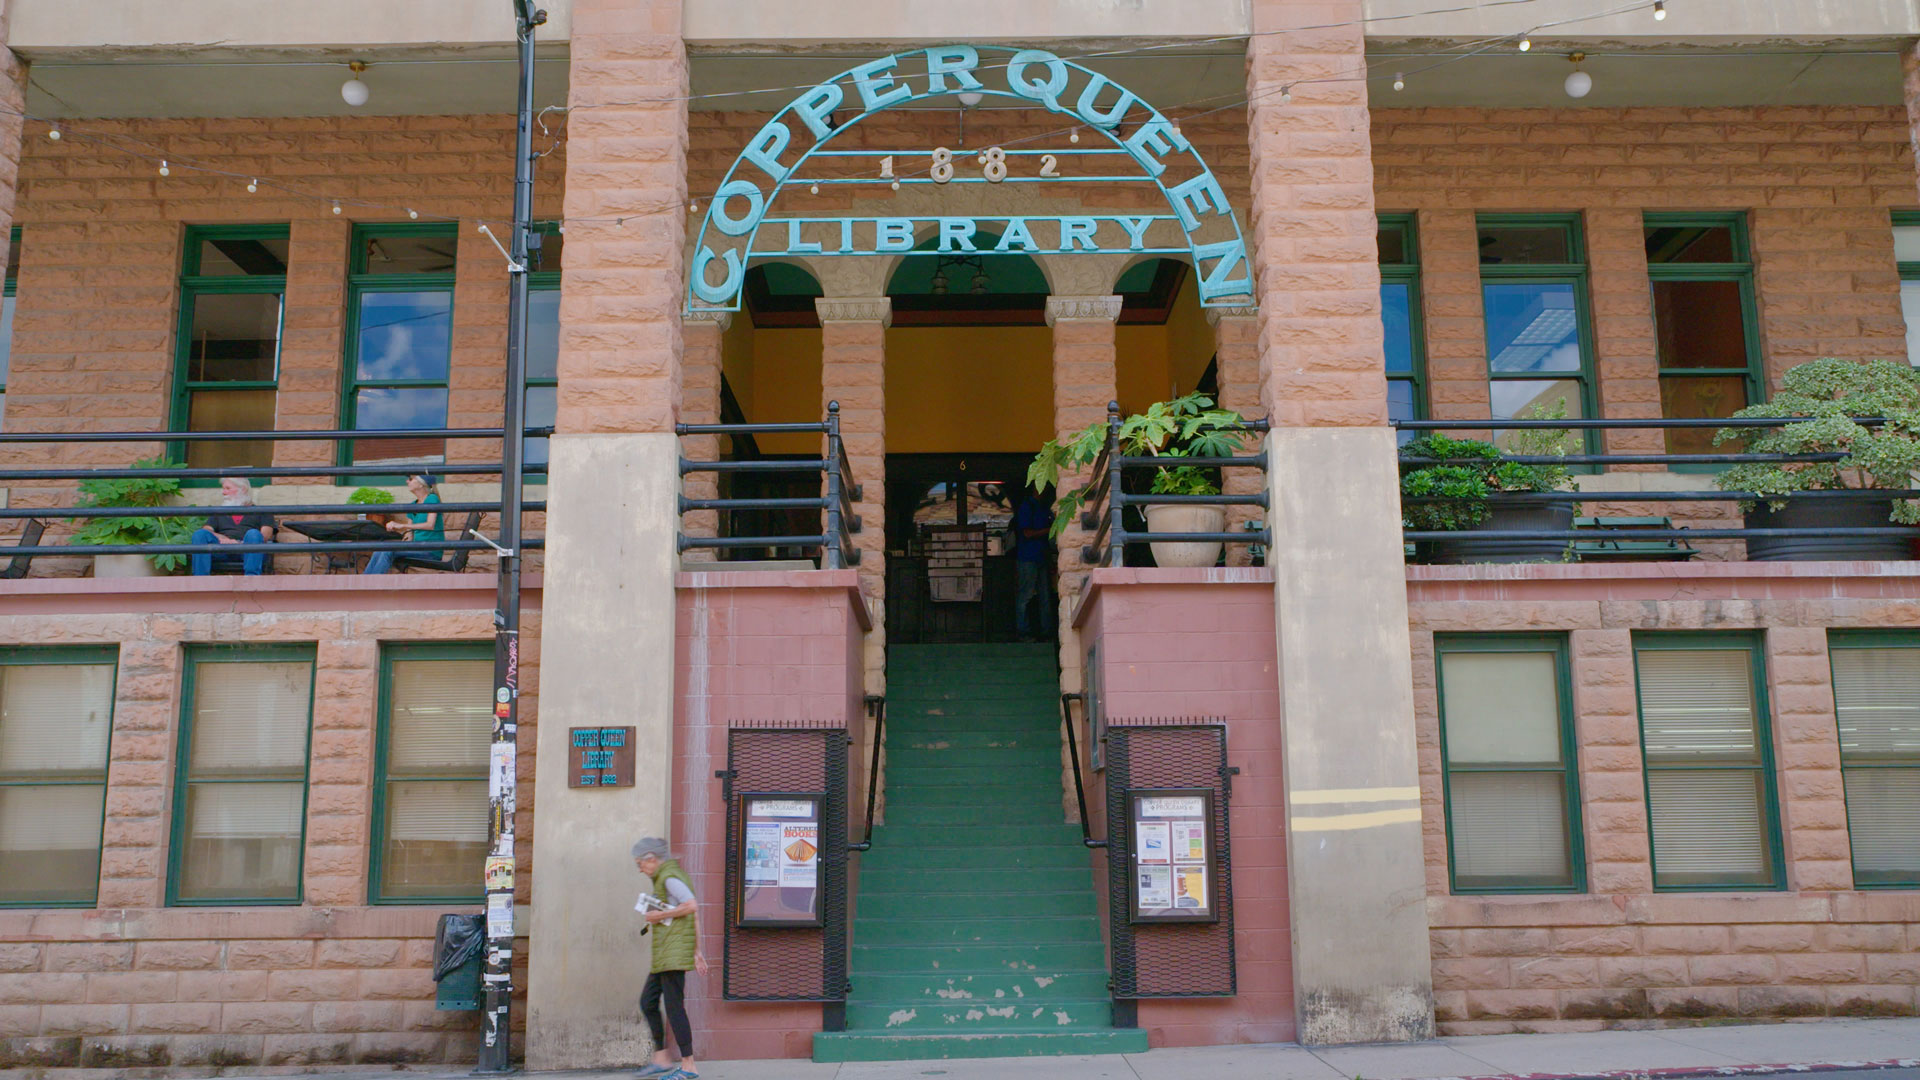 Copper Queen Library